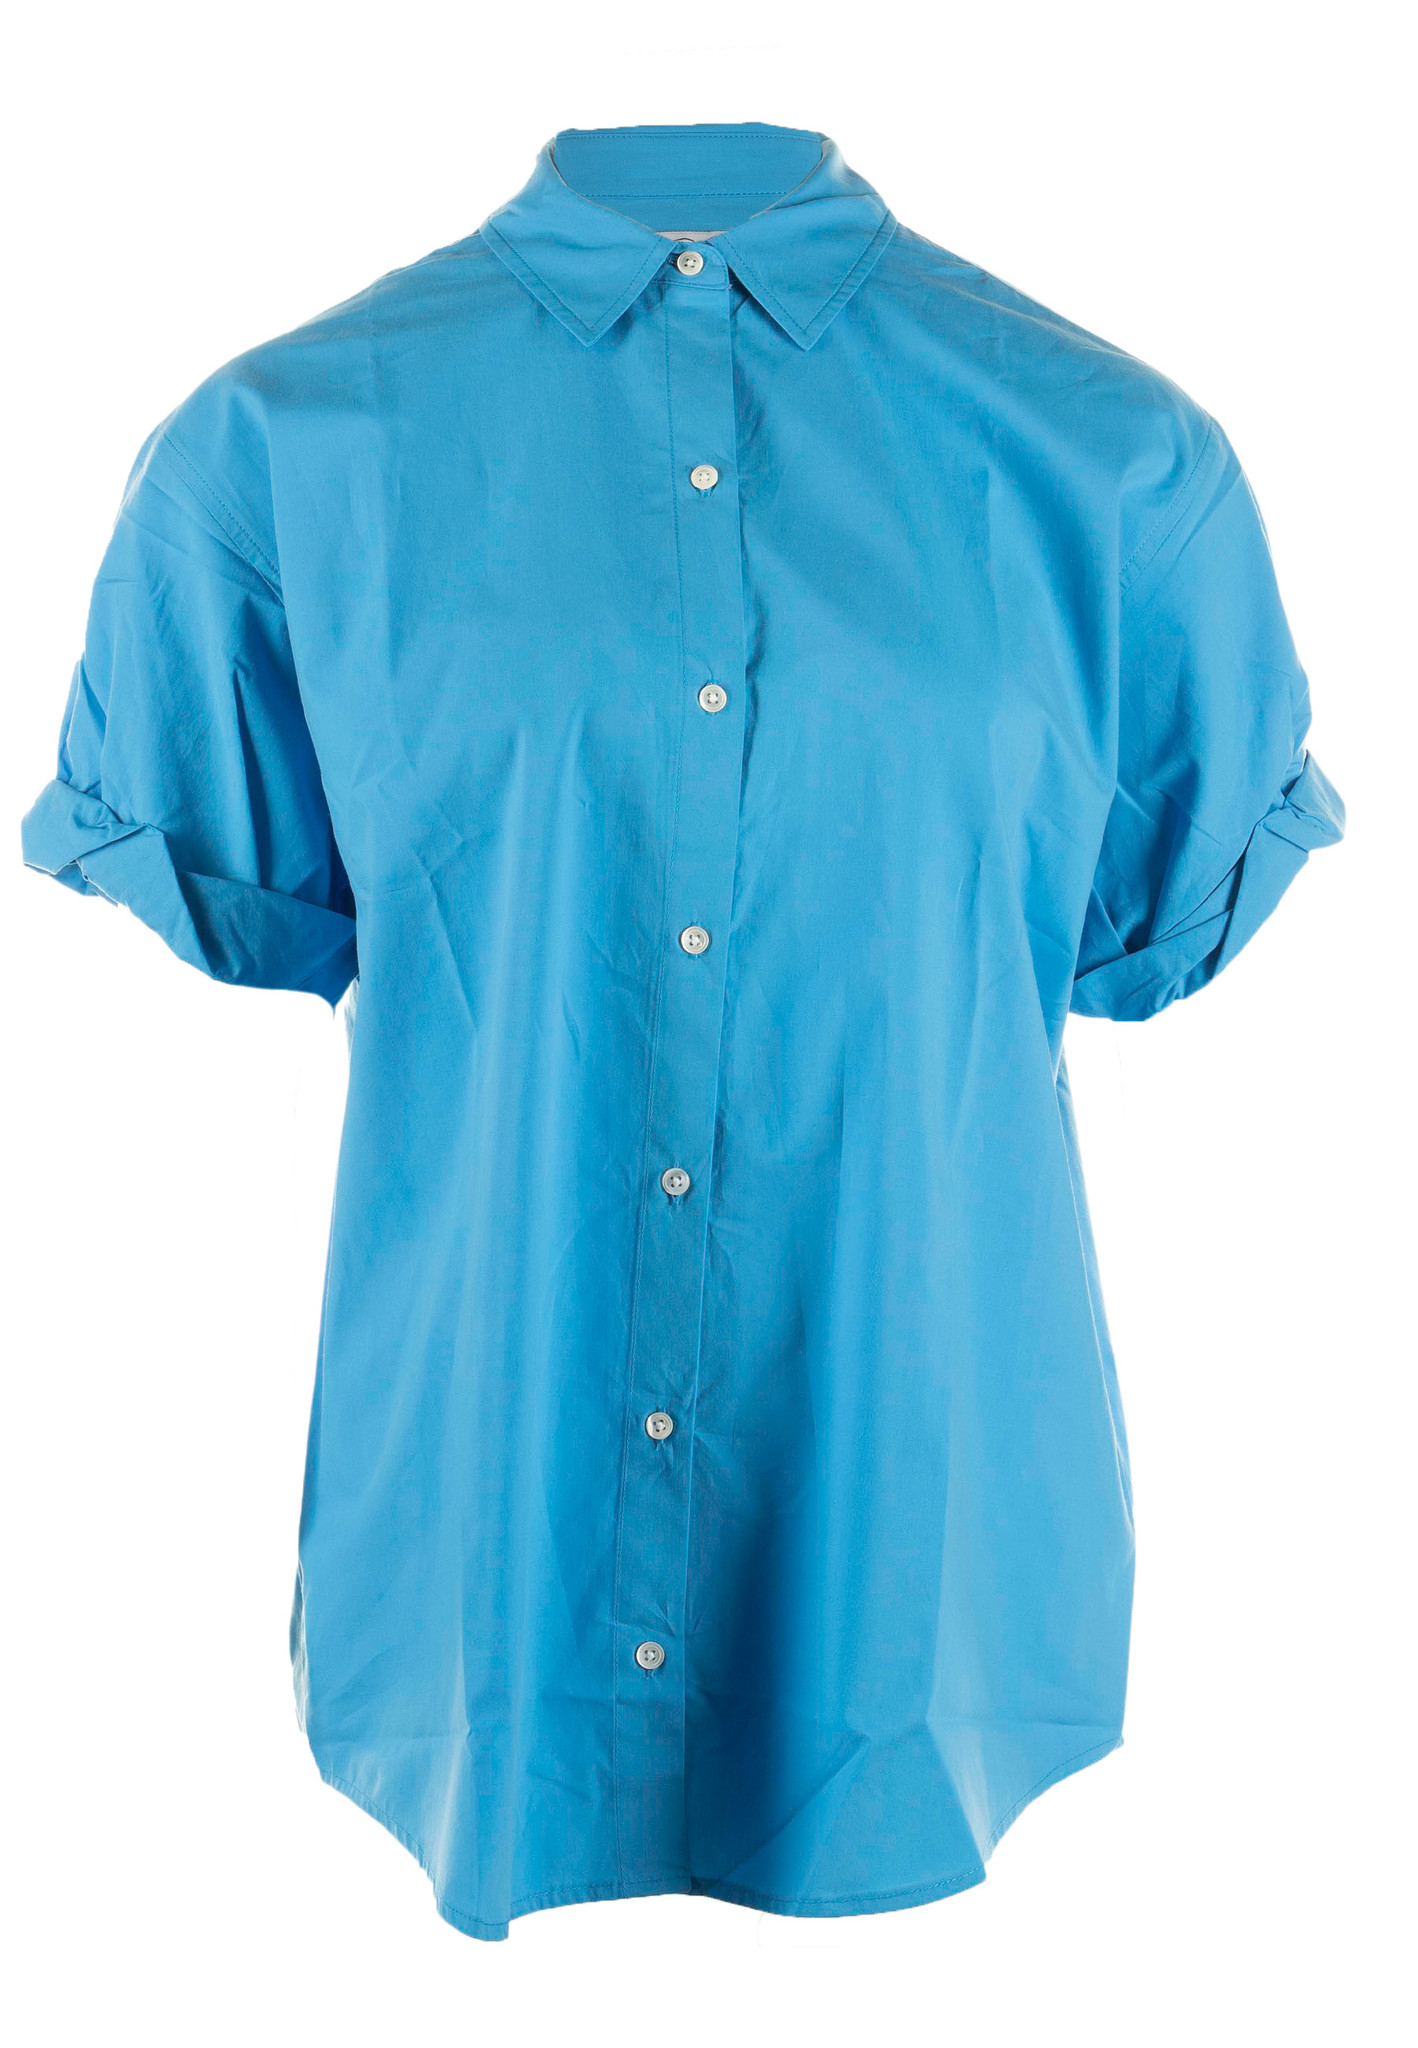 Rails 670-568-434 blouses blauw Dames maat L